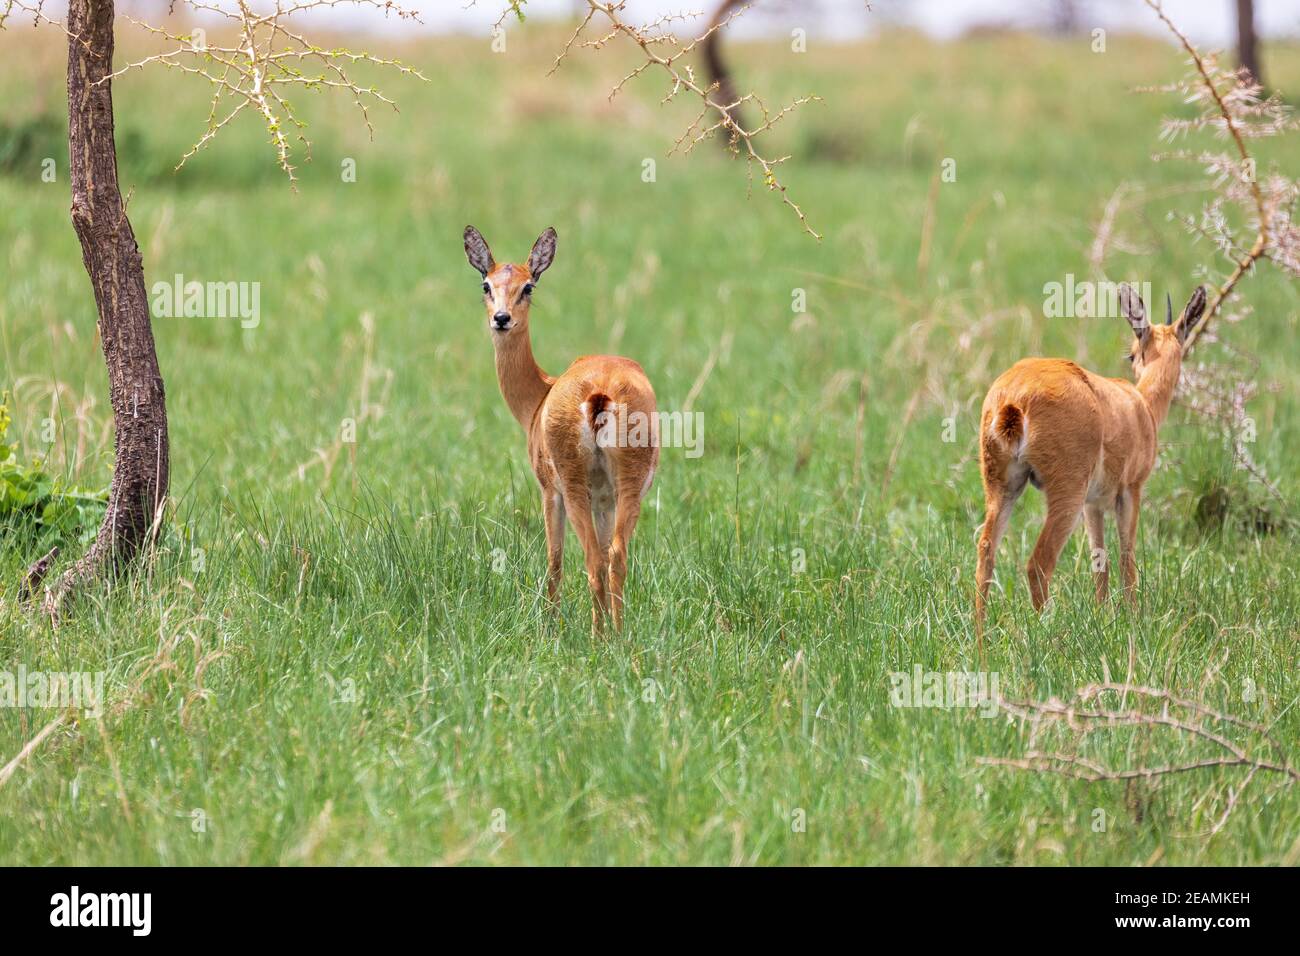 Cute Oribi antelope Ethiopia, Africa wildlife Stock Photo